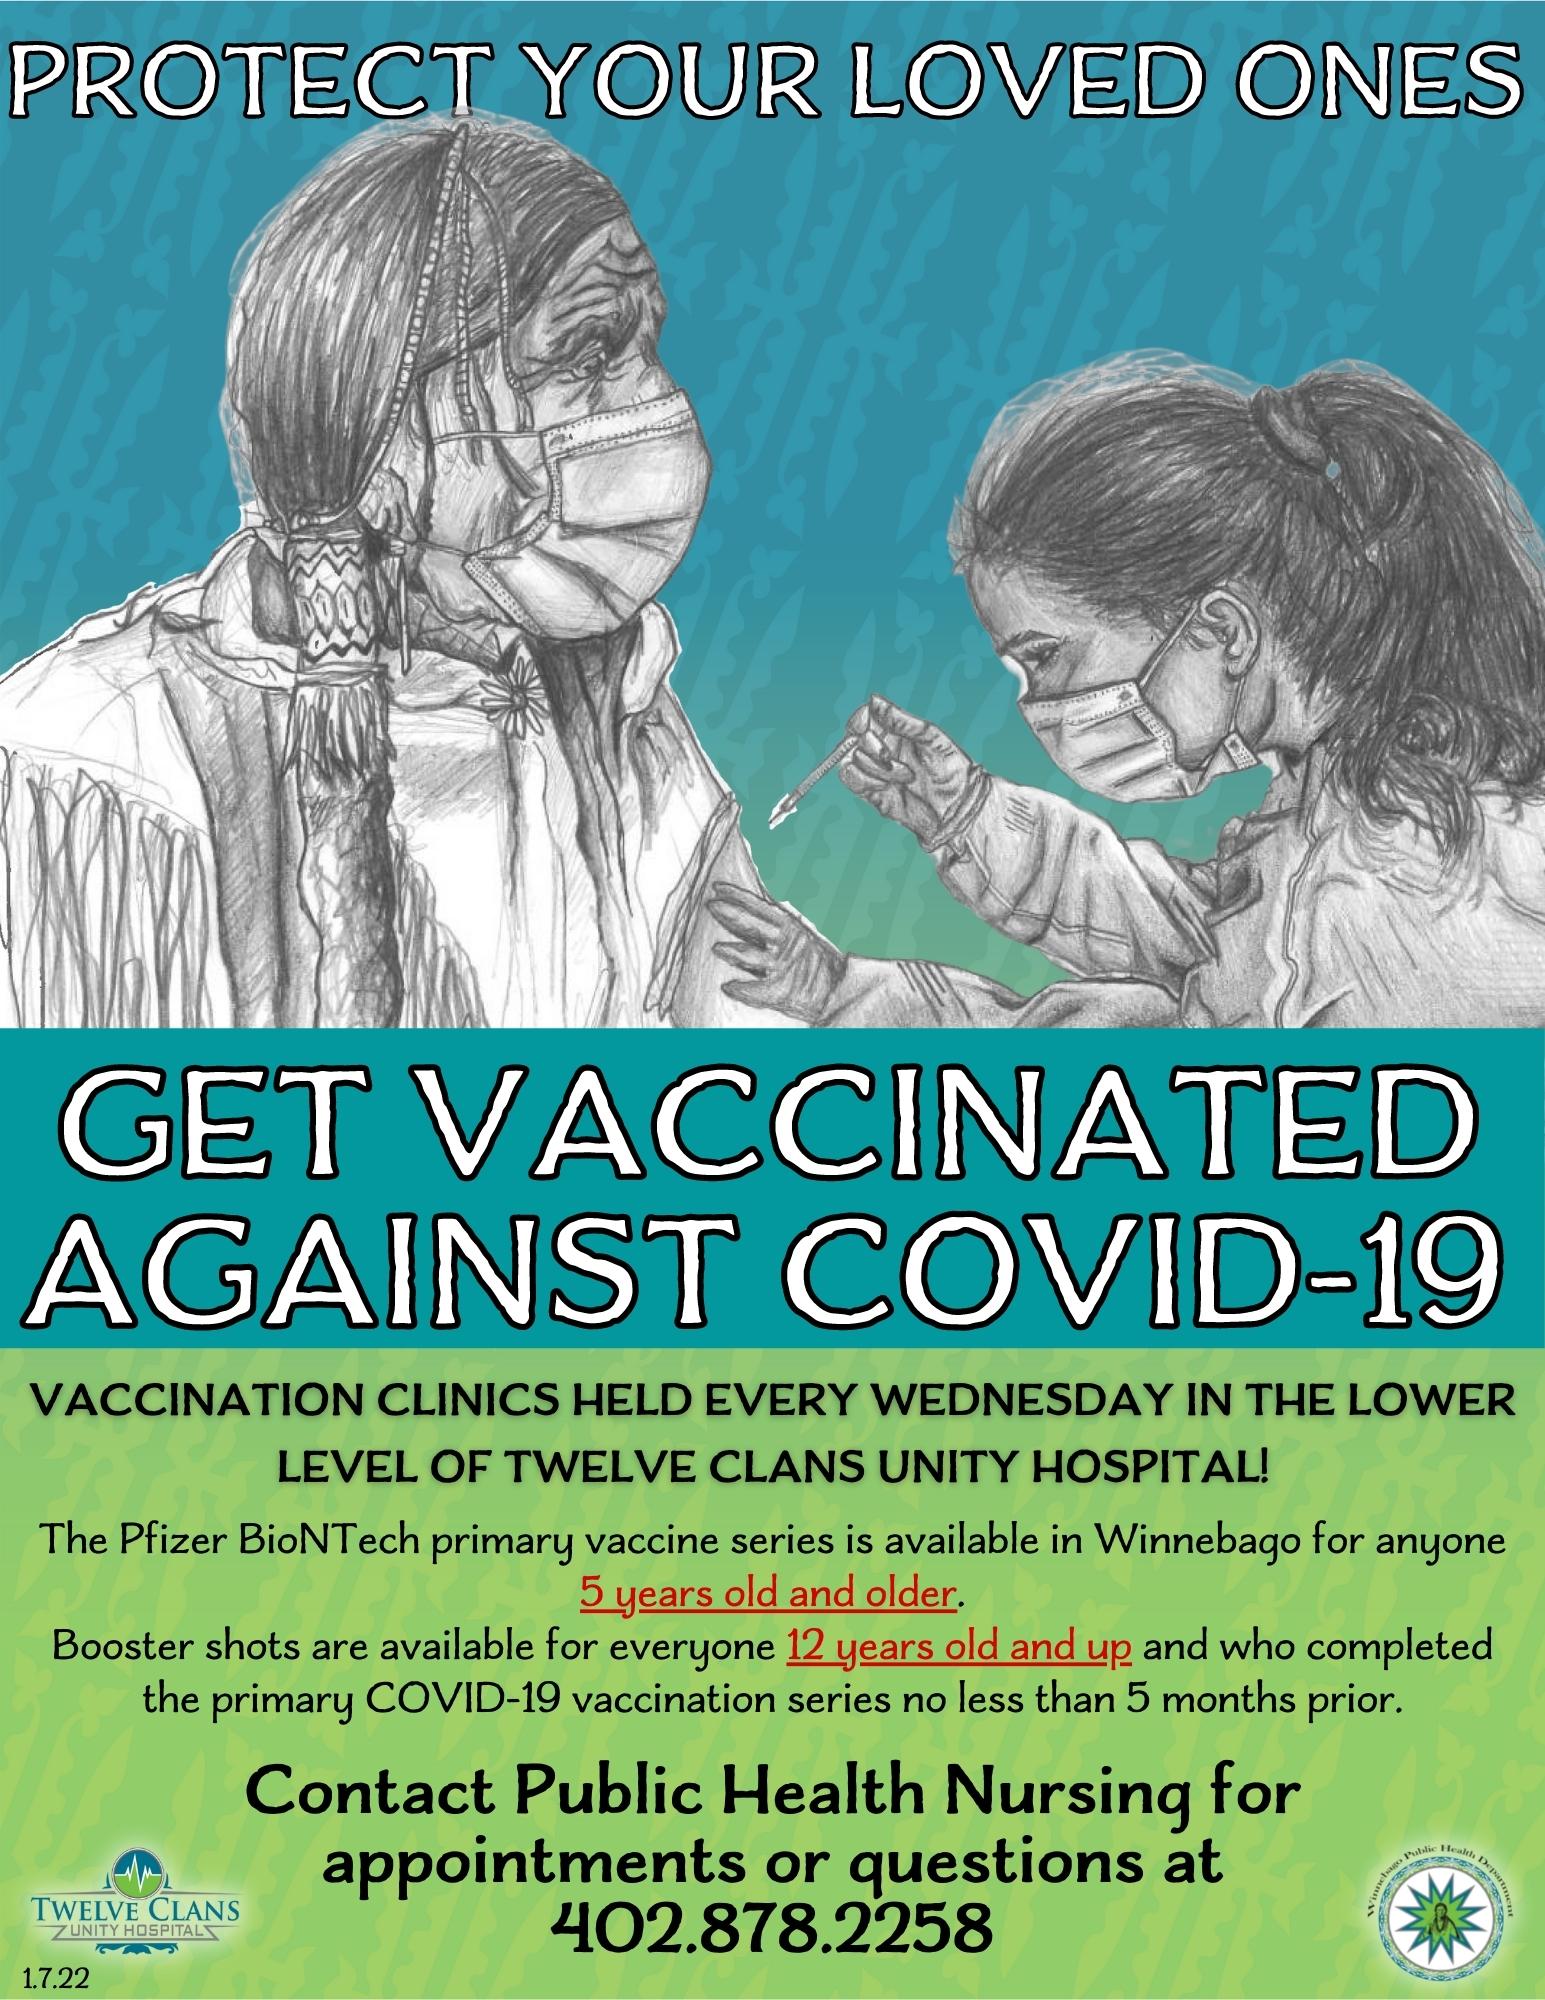 https://twelveclanshospital.com/wp-content/uploads/2022/01/COVID-Vaccination-Flyer-2022.jpg